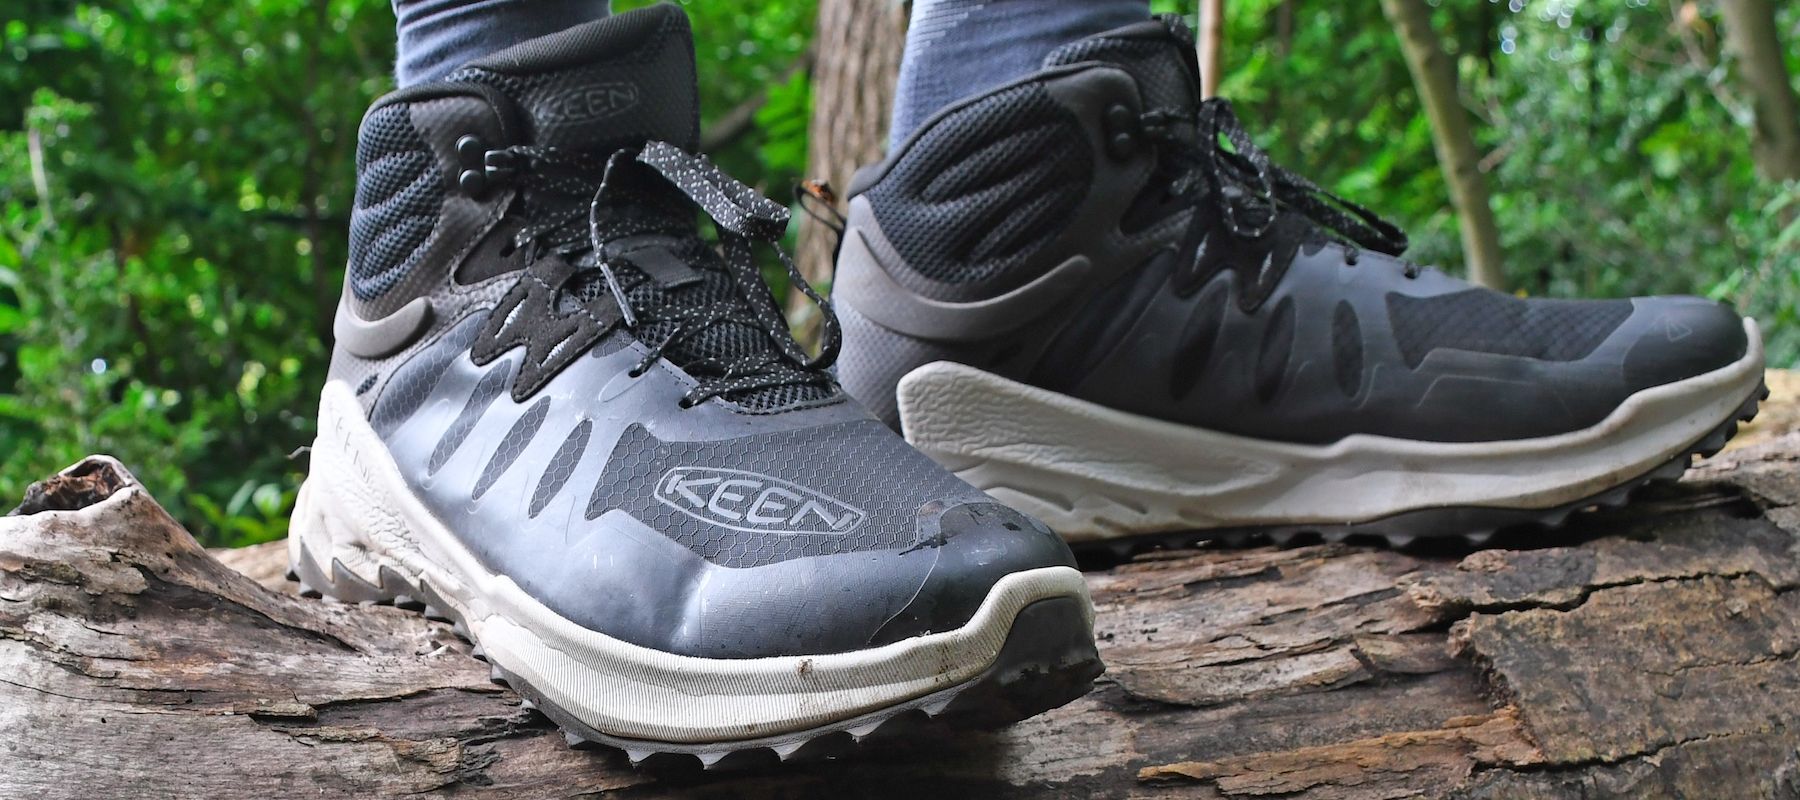 KEEN Zionic Waterproof Hiking Boots review | Advnture